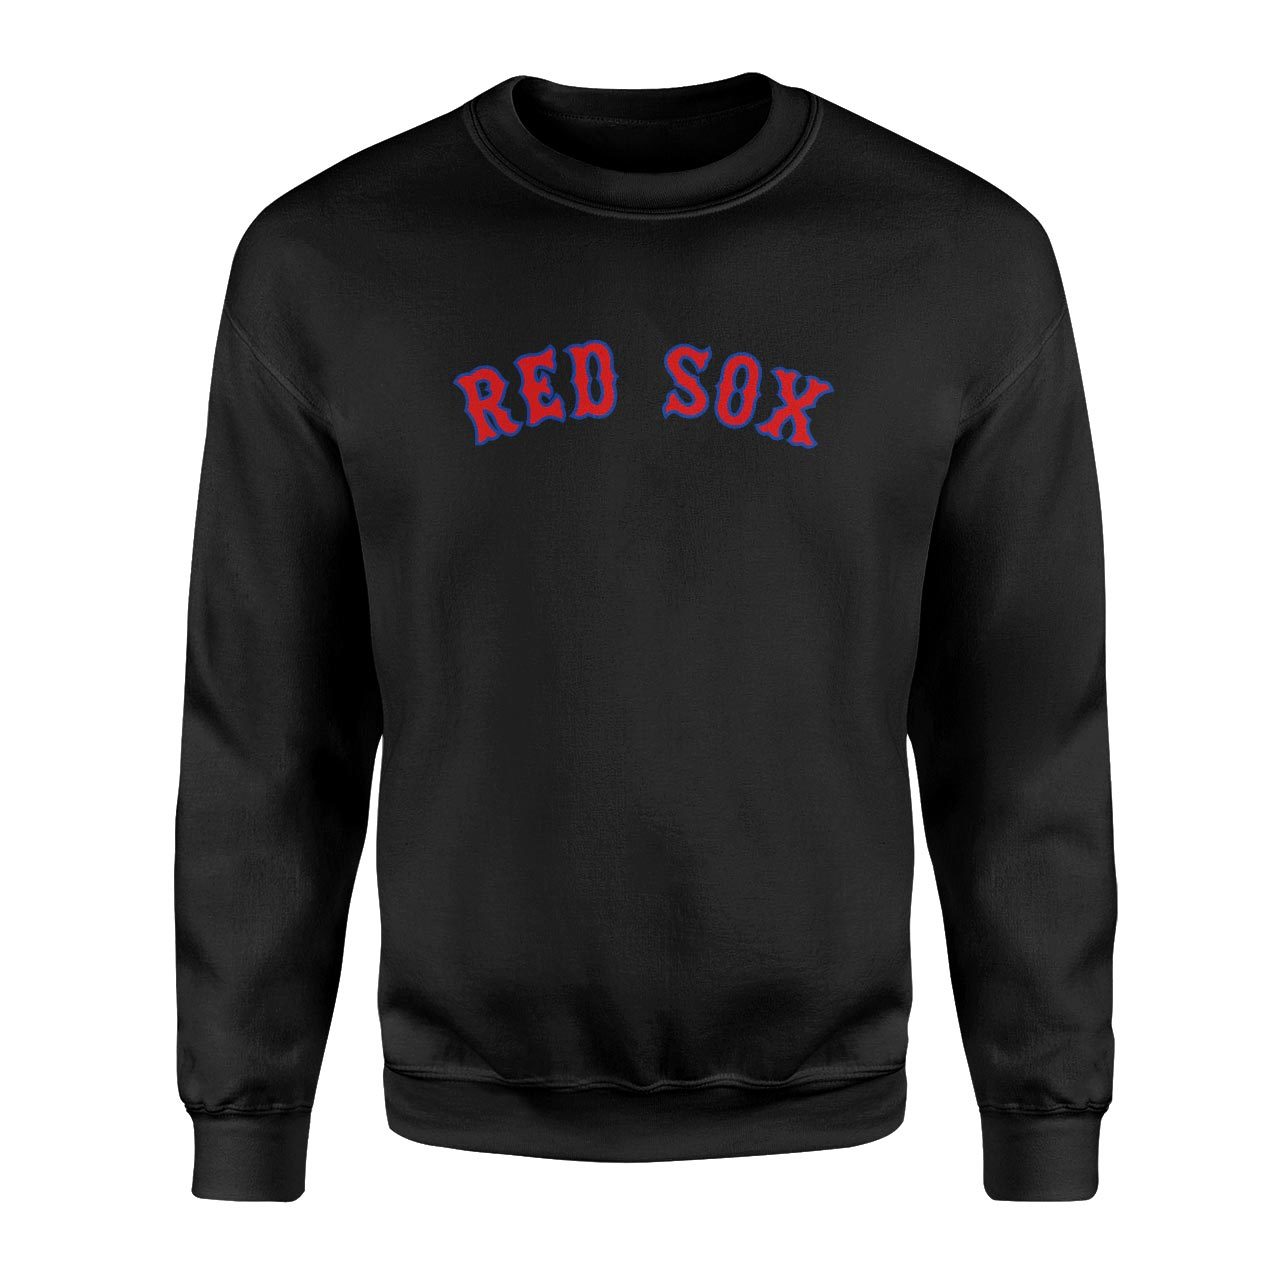 Boston Red Sox Siyah Sweatshirt